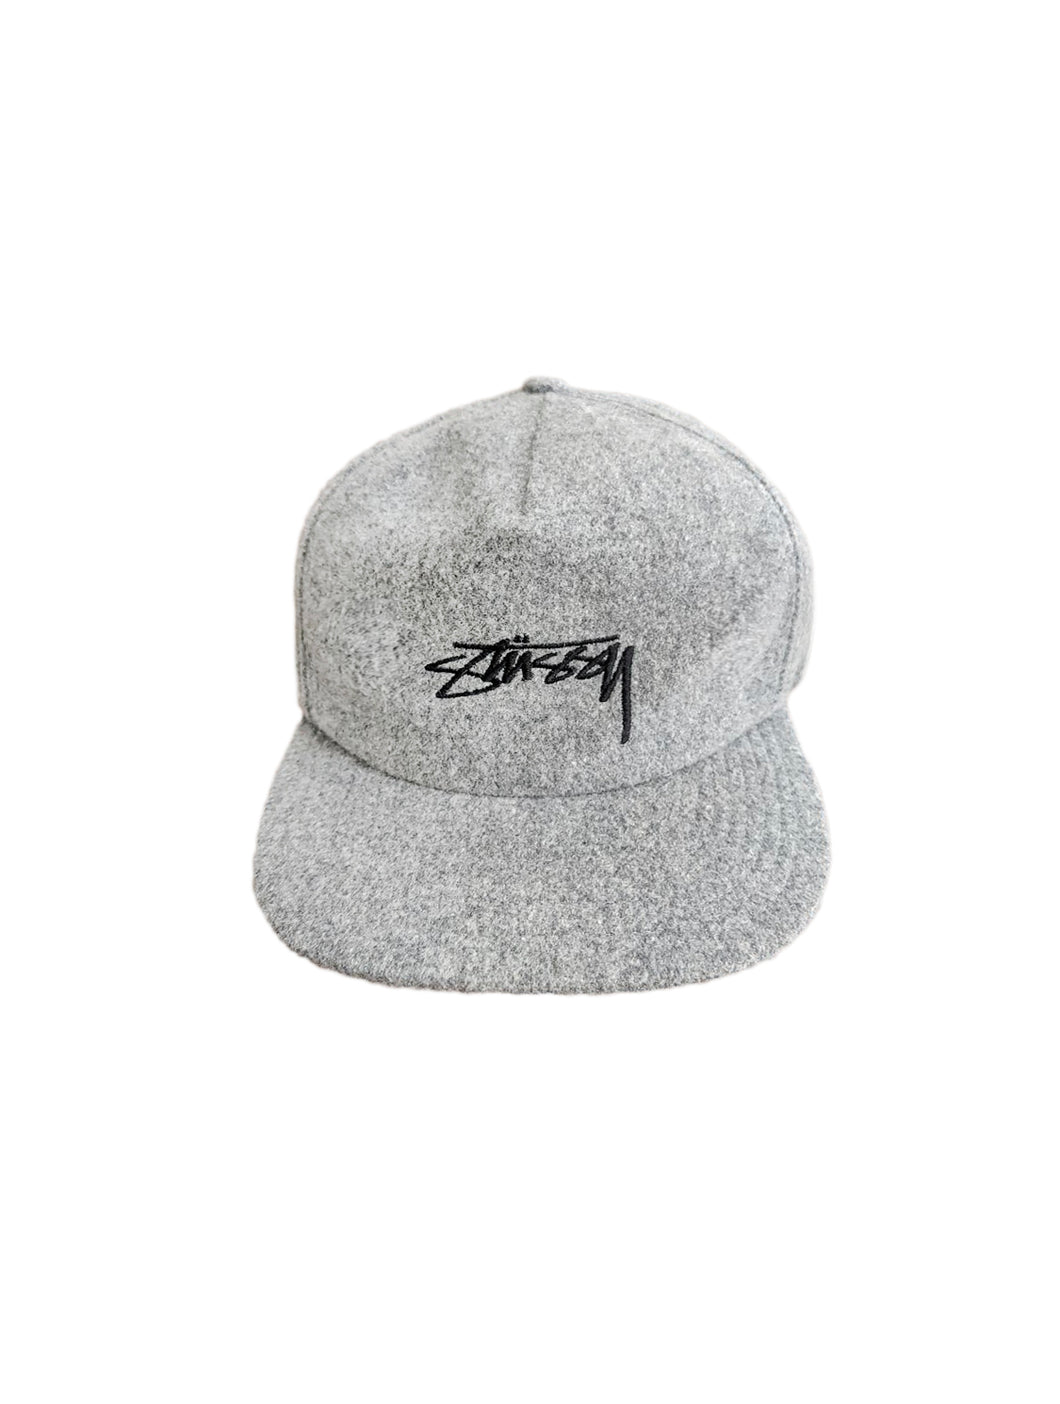 Stussy Gray Wool Hat